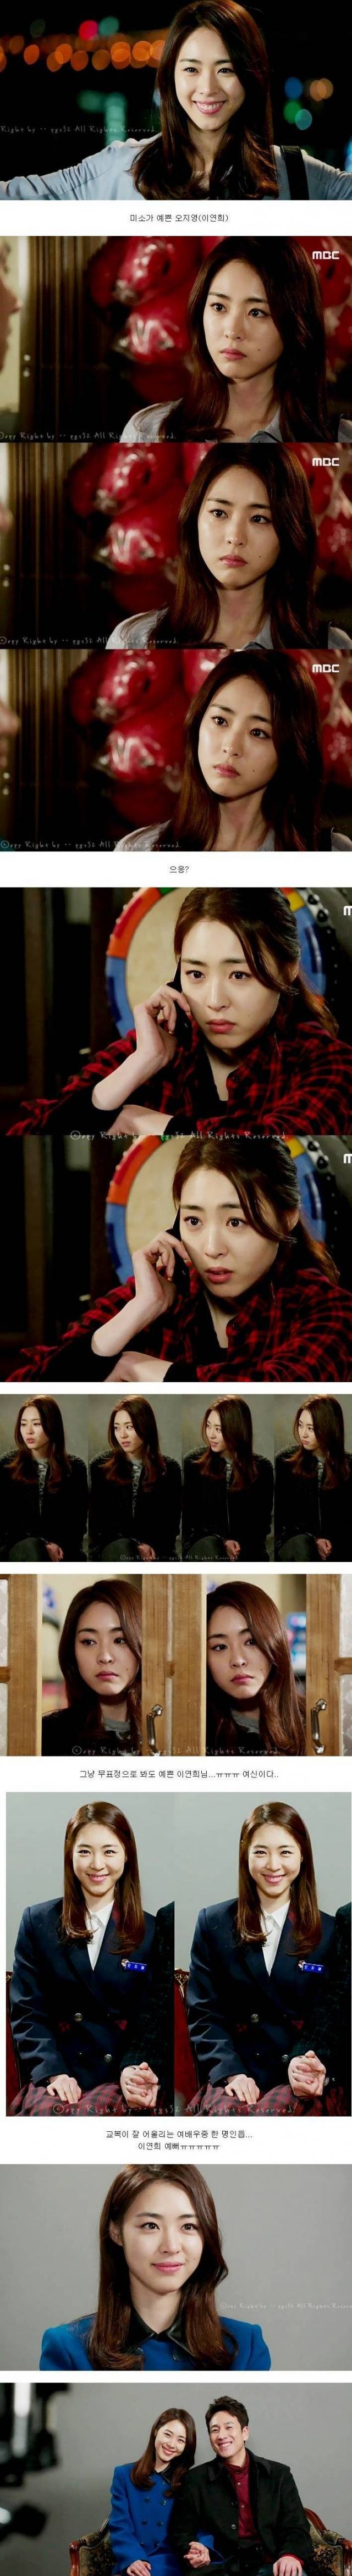 episode 20 captures for the Korean drama 'Miss Korea'